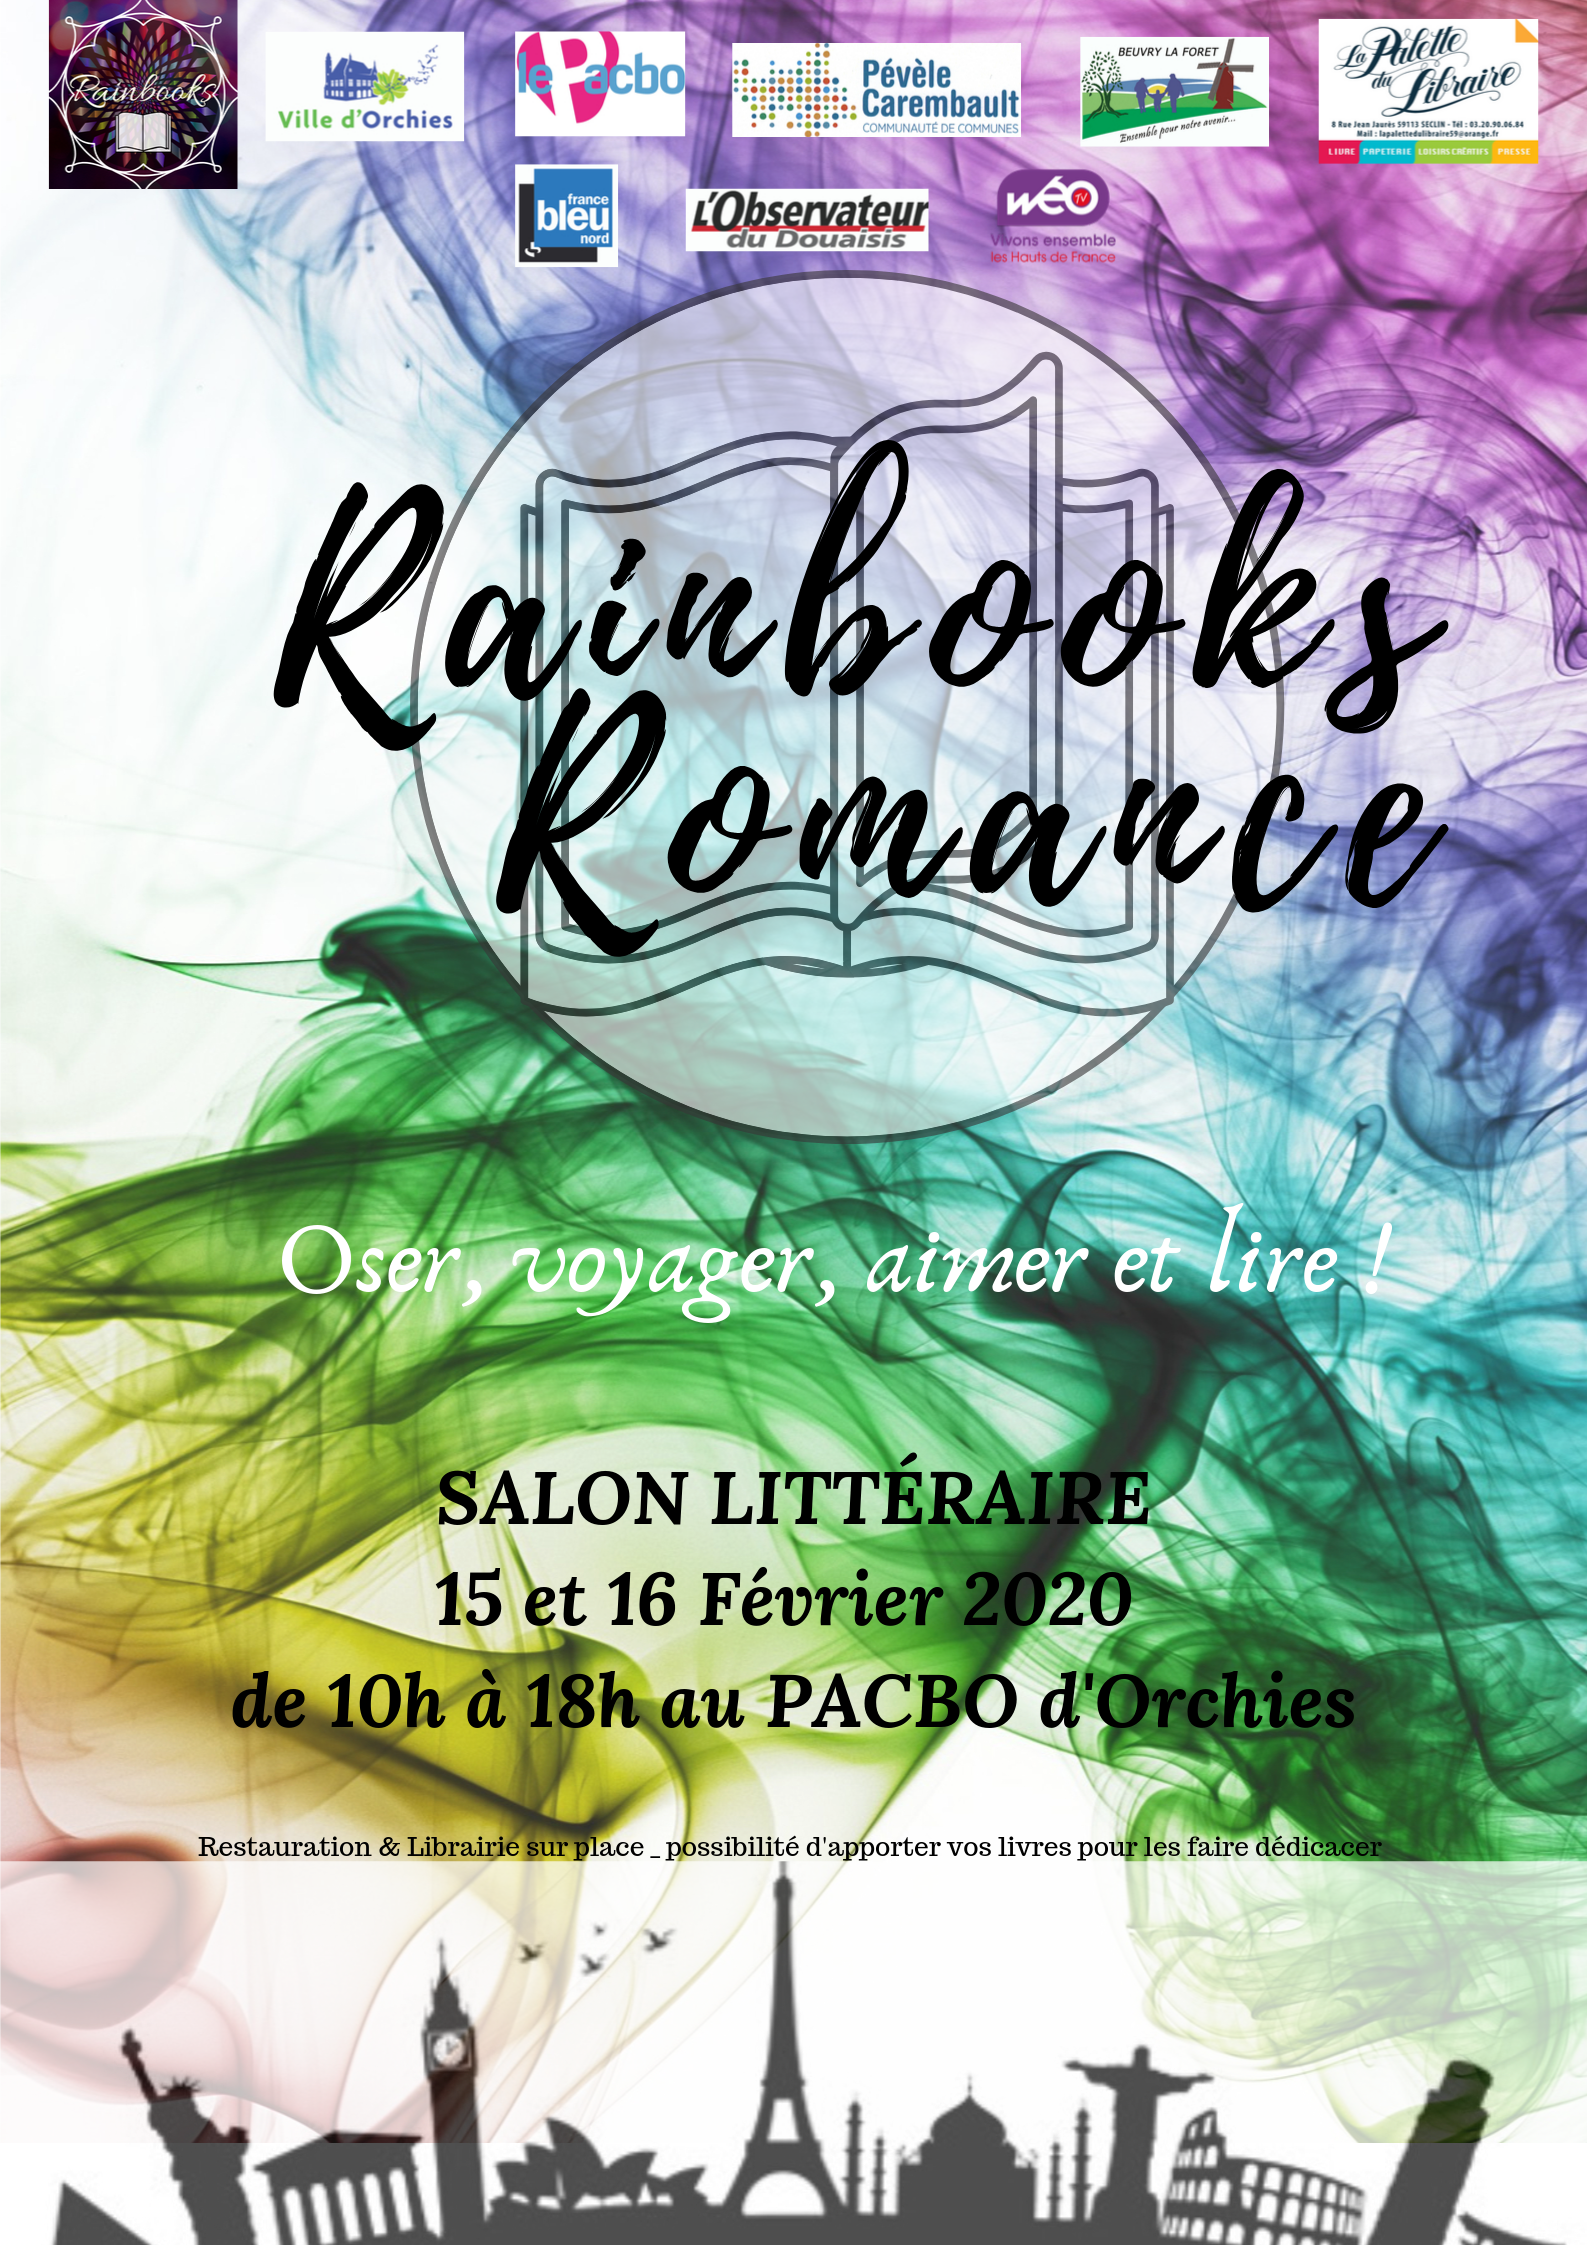 Rainbooks Romance